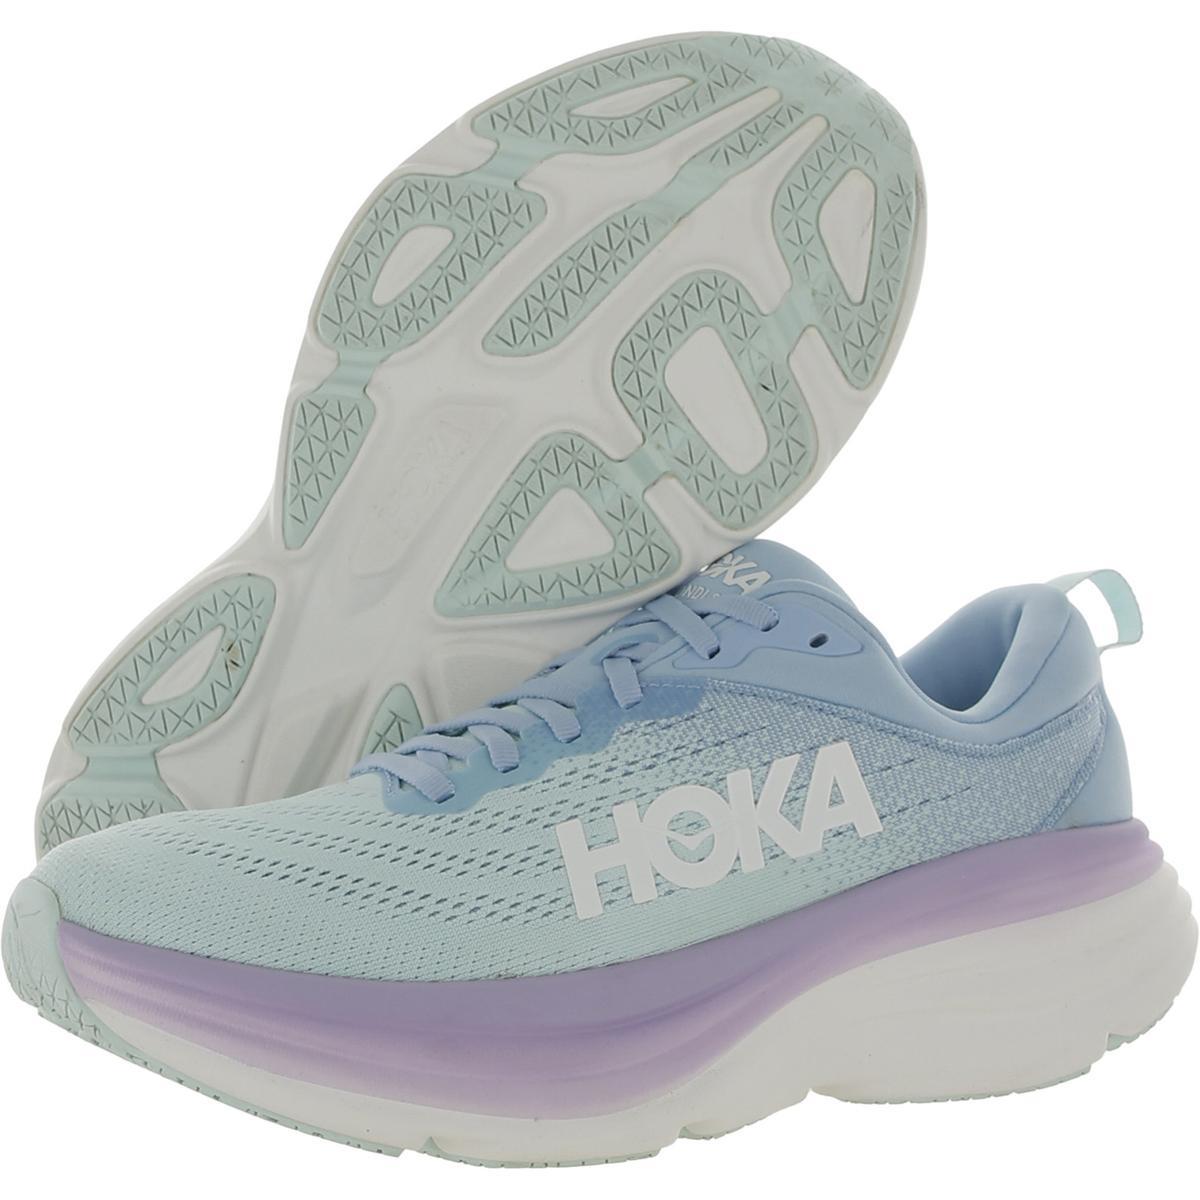 Hoka One One Womens Bondi 8 Running Casual and Fashion Sneakers Shoes Bhfo 8131